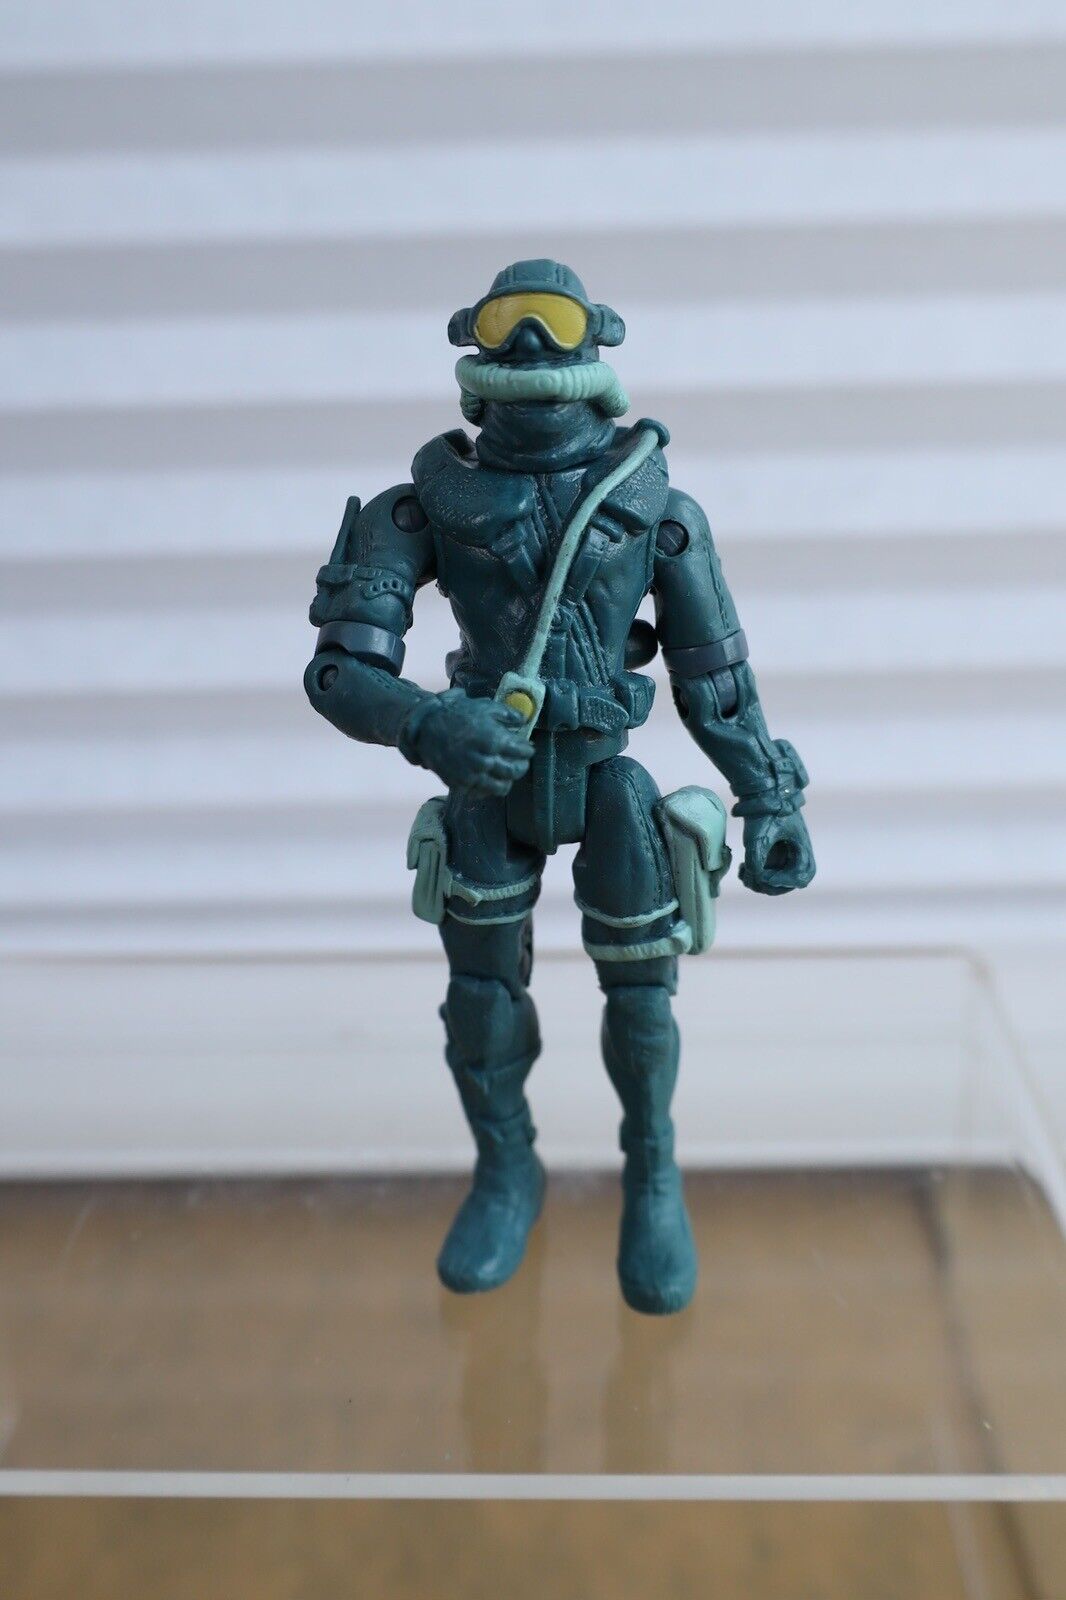 2005 Gills Frogman Lanard The Corps Terra Team Military Action Figure 3.75" 